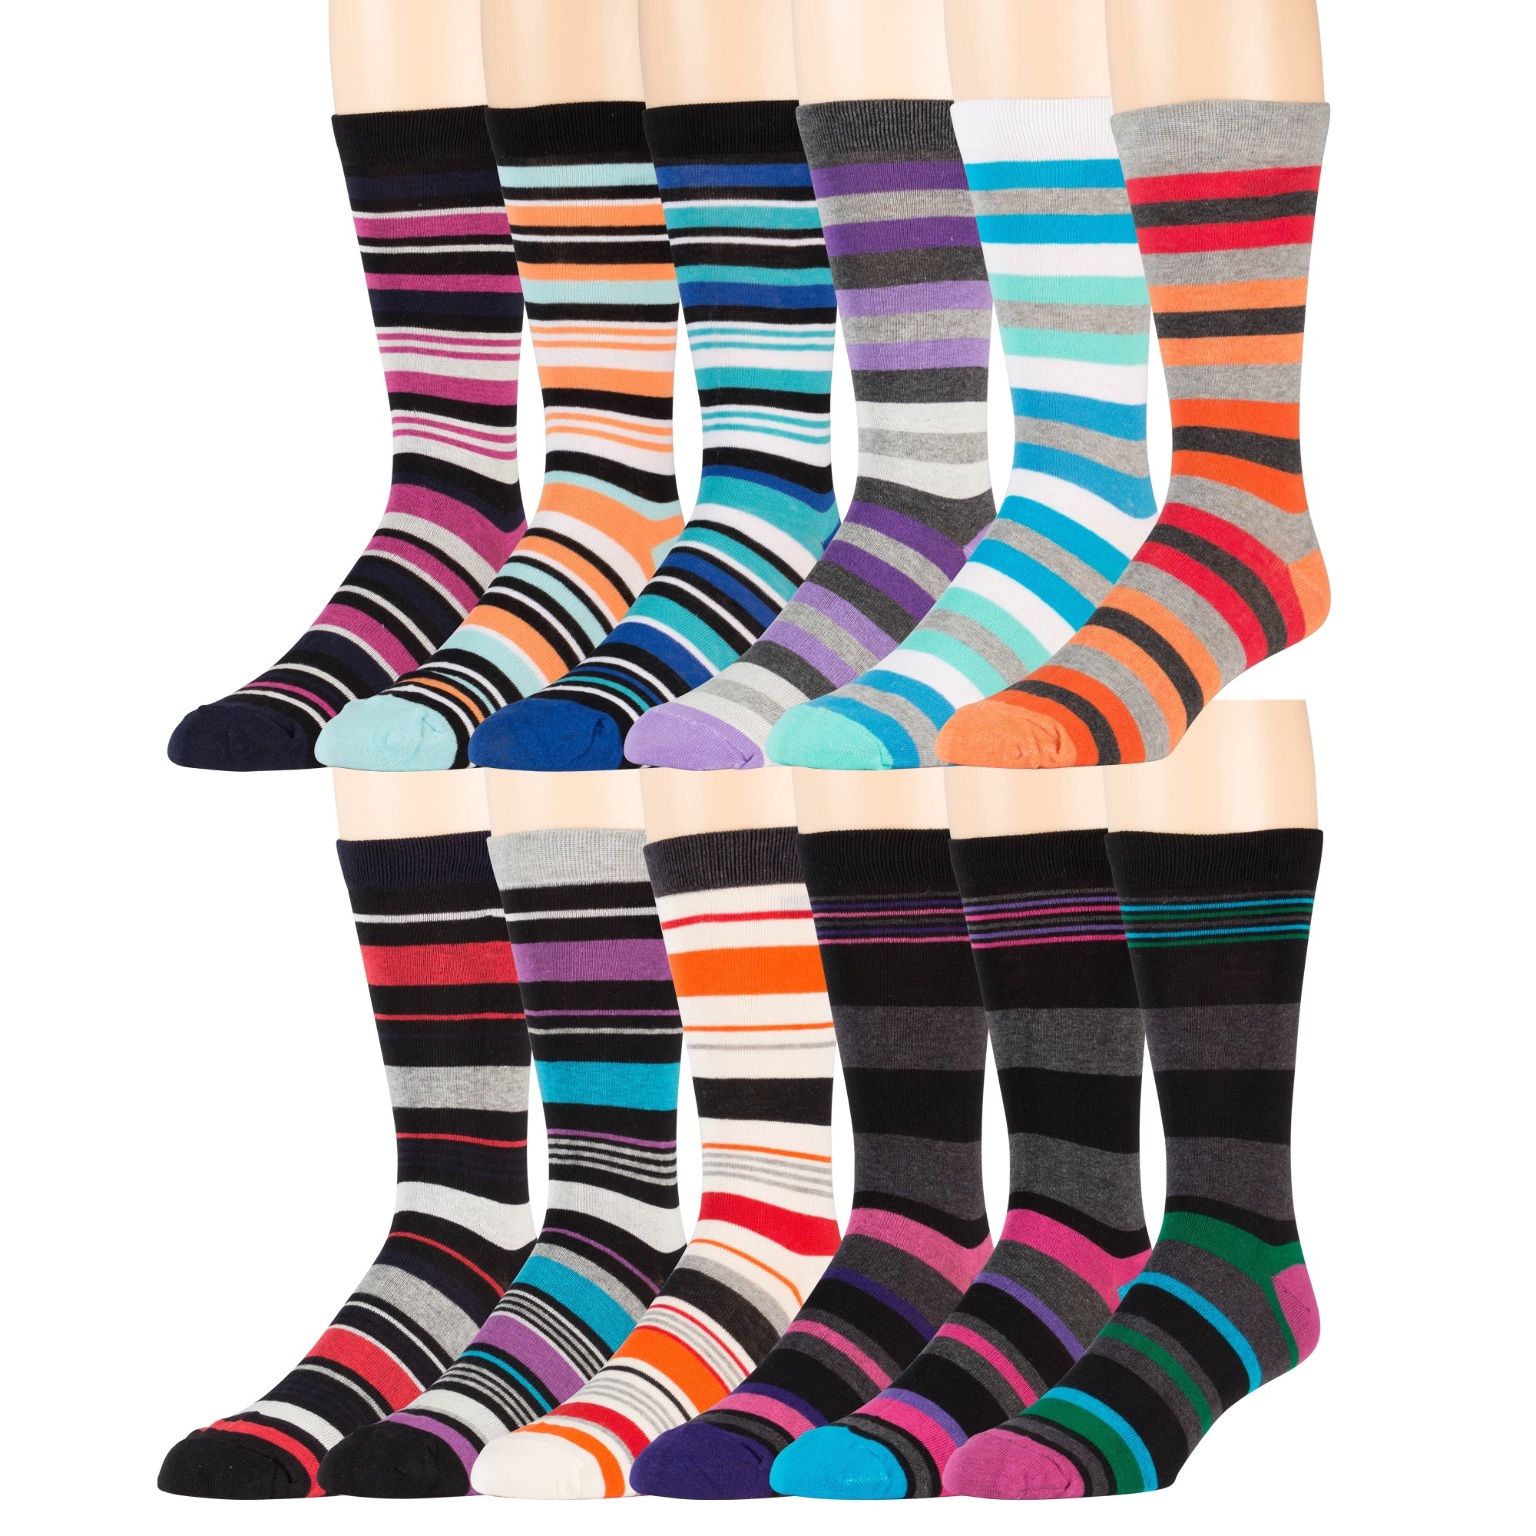 Men's Dress Socks - Assorted Stripes, Size 10-13